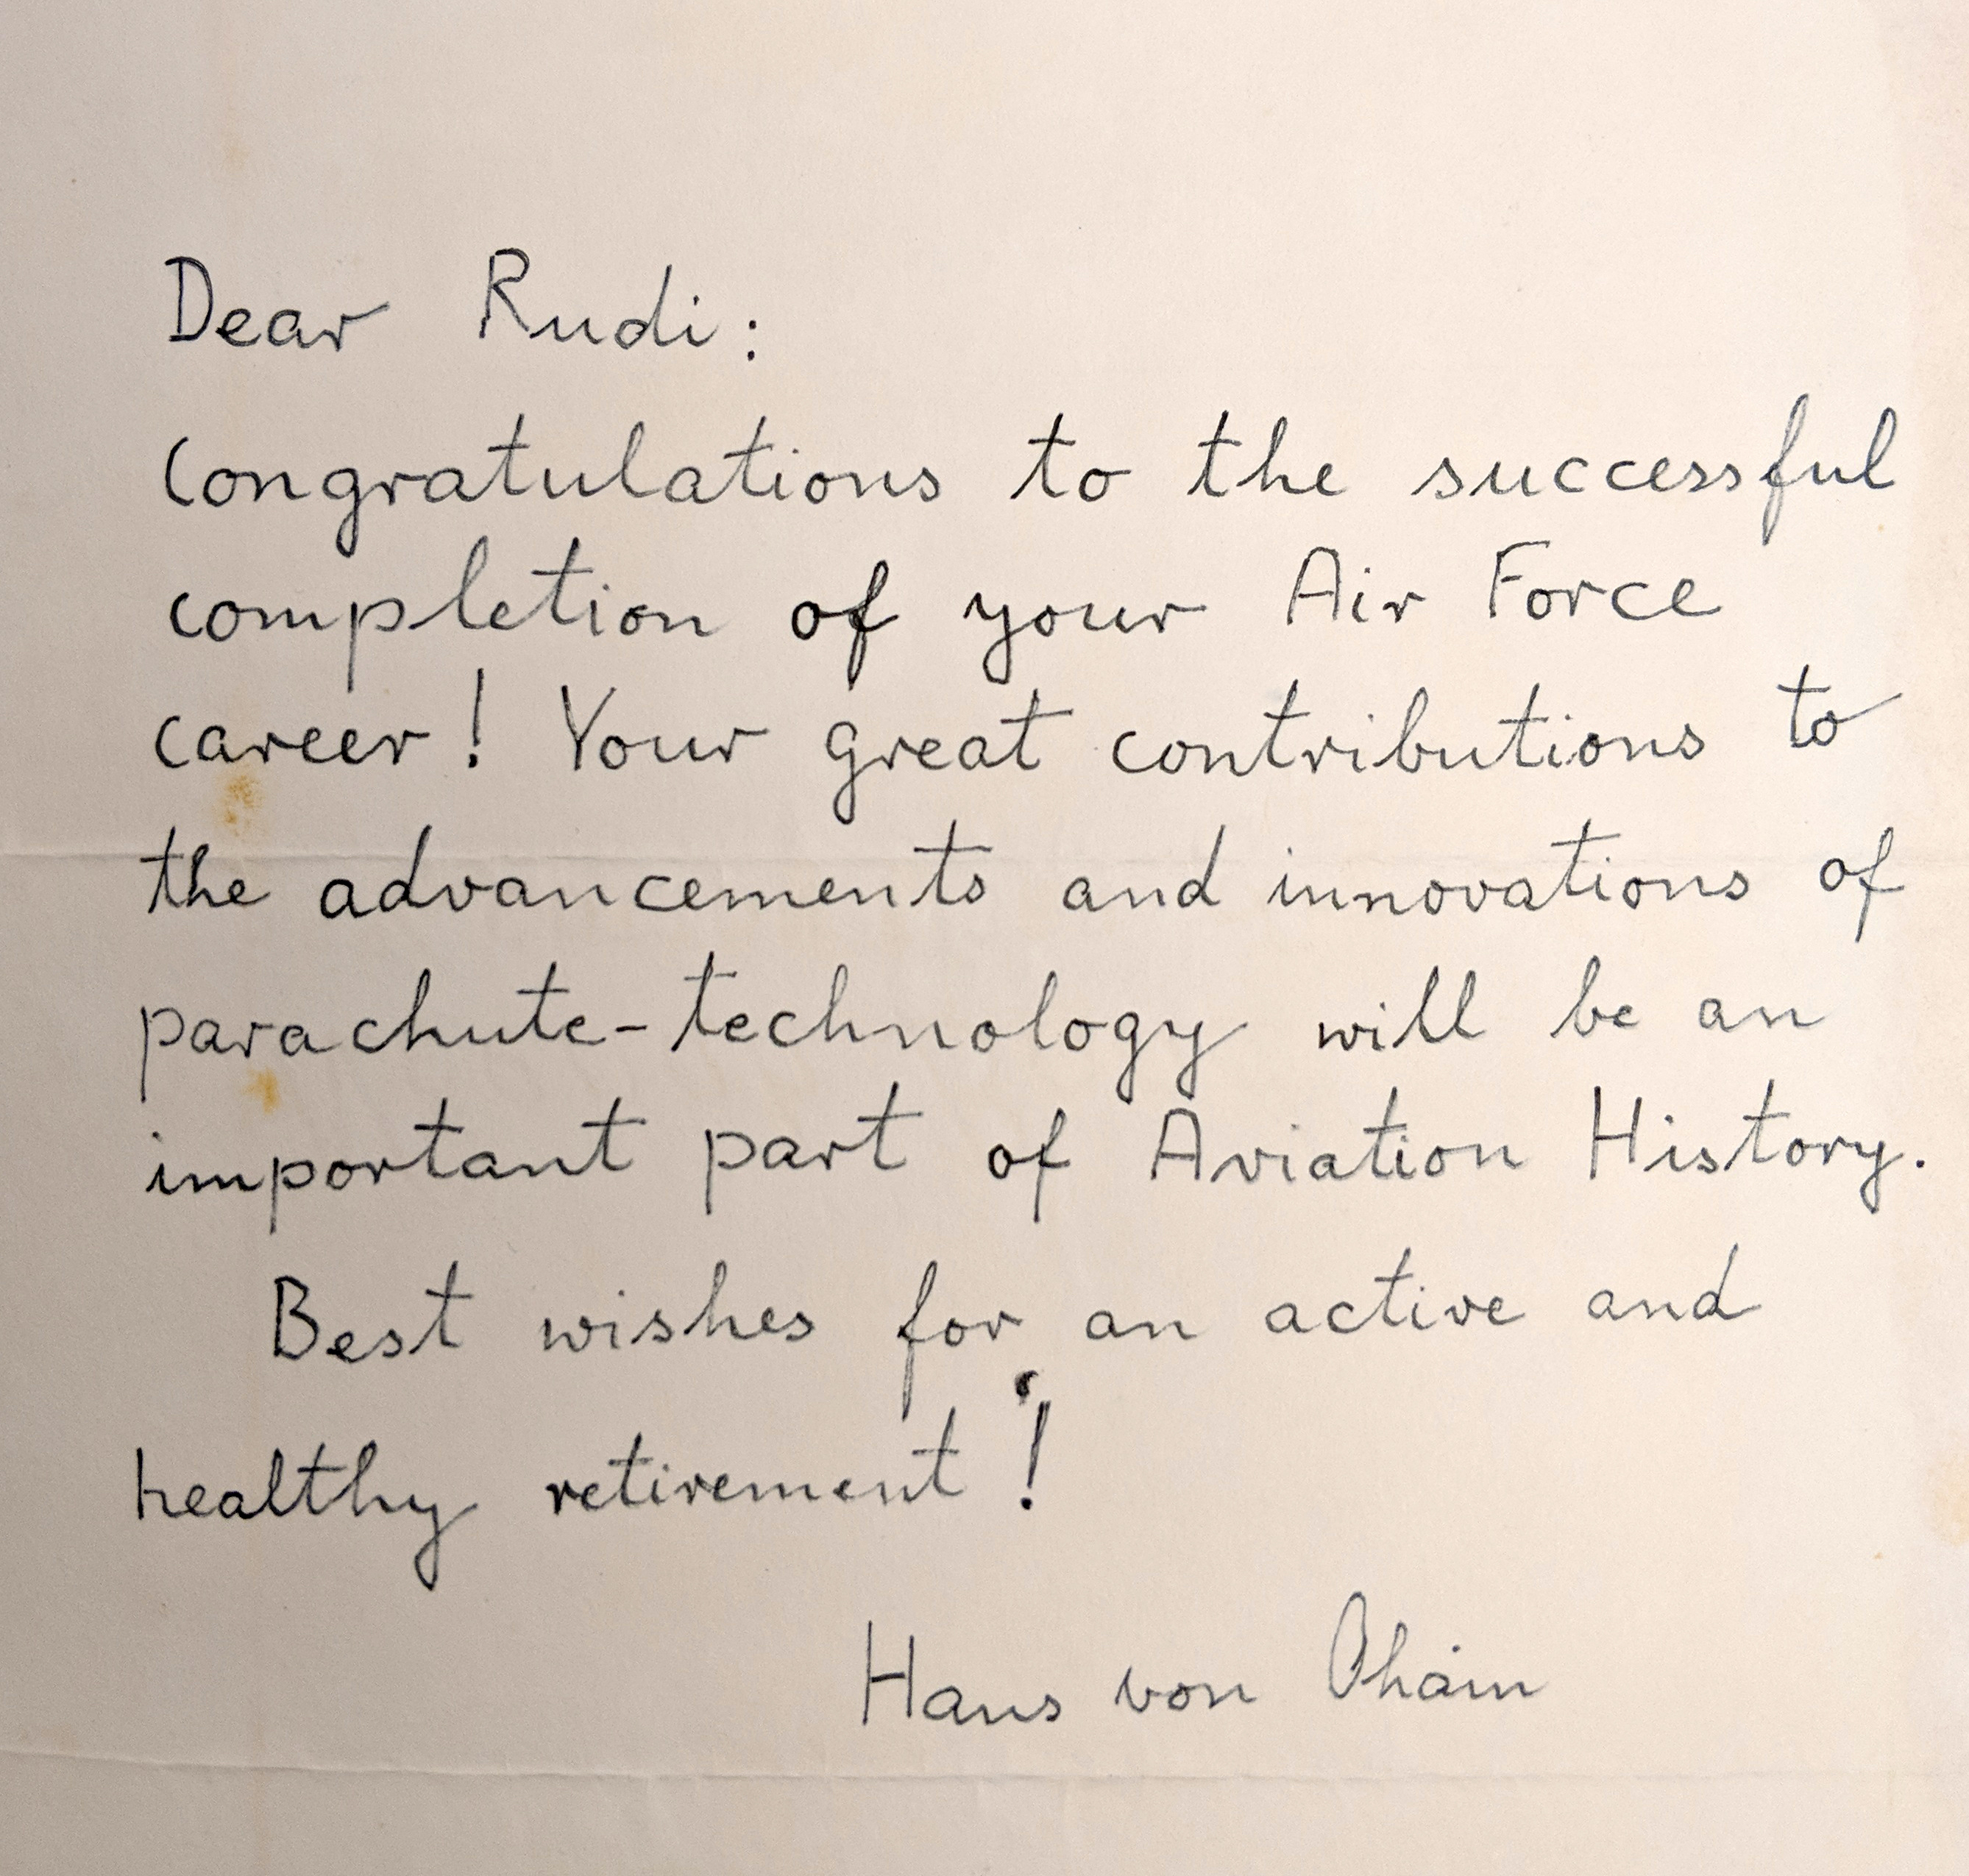 A note from Hans von Ohain to Berndt, congratulating him on retirement (Box 5, retirement album)